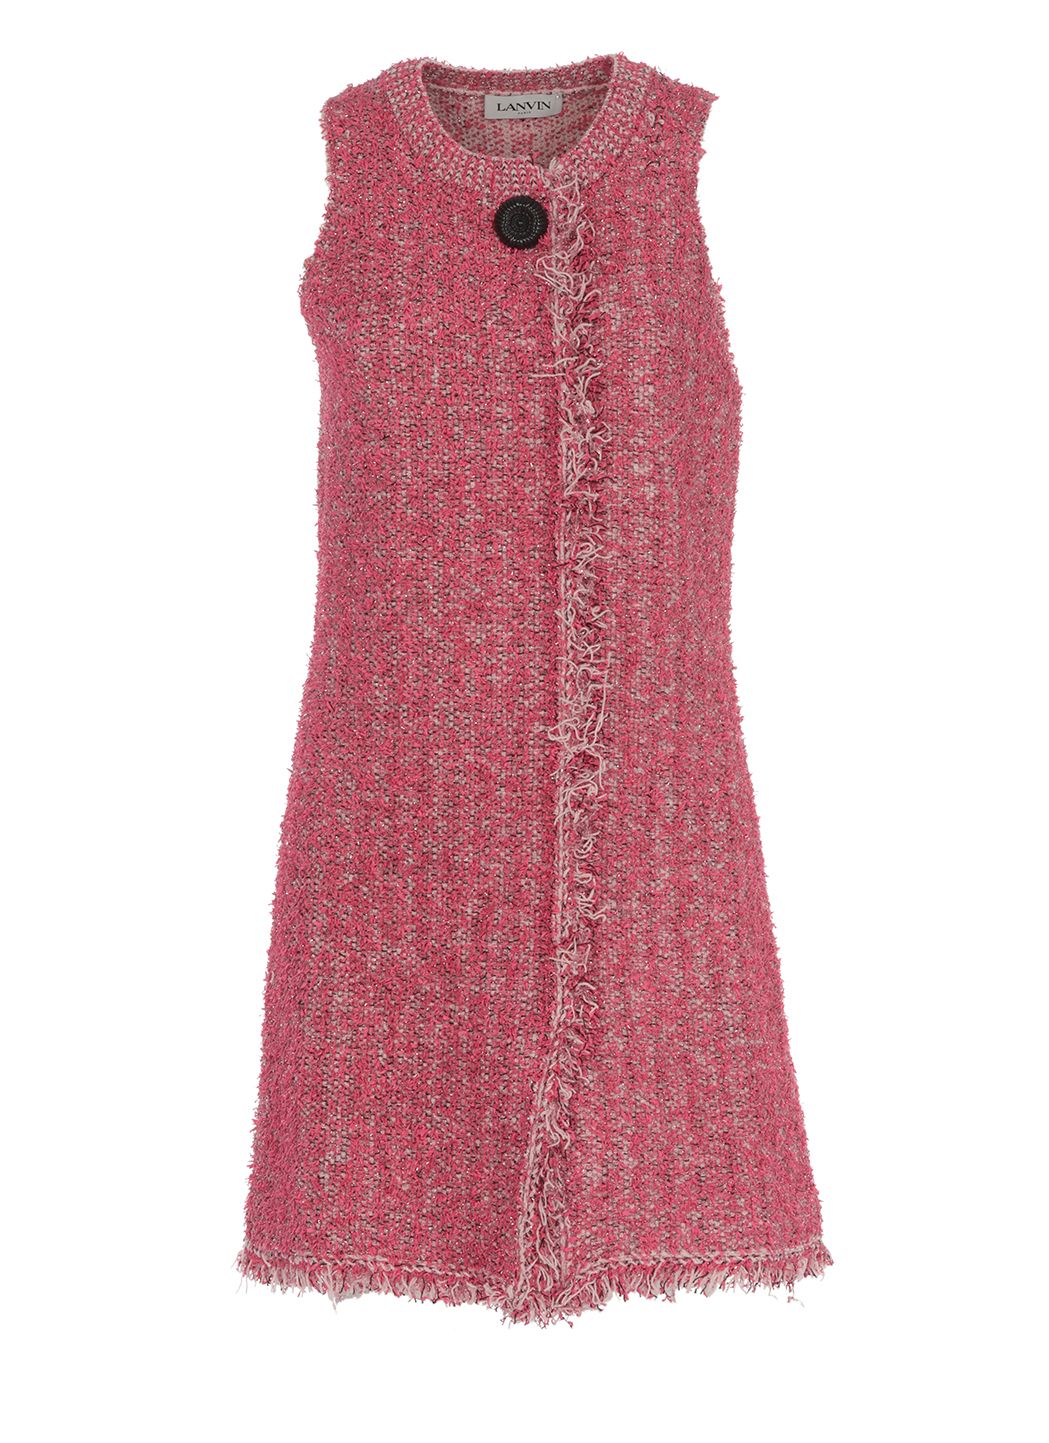 Cotton blend dress with lurex details